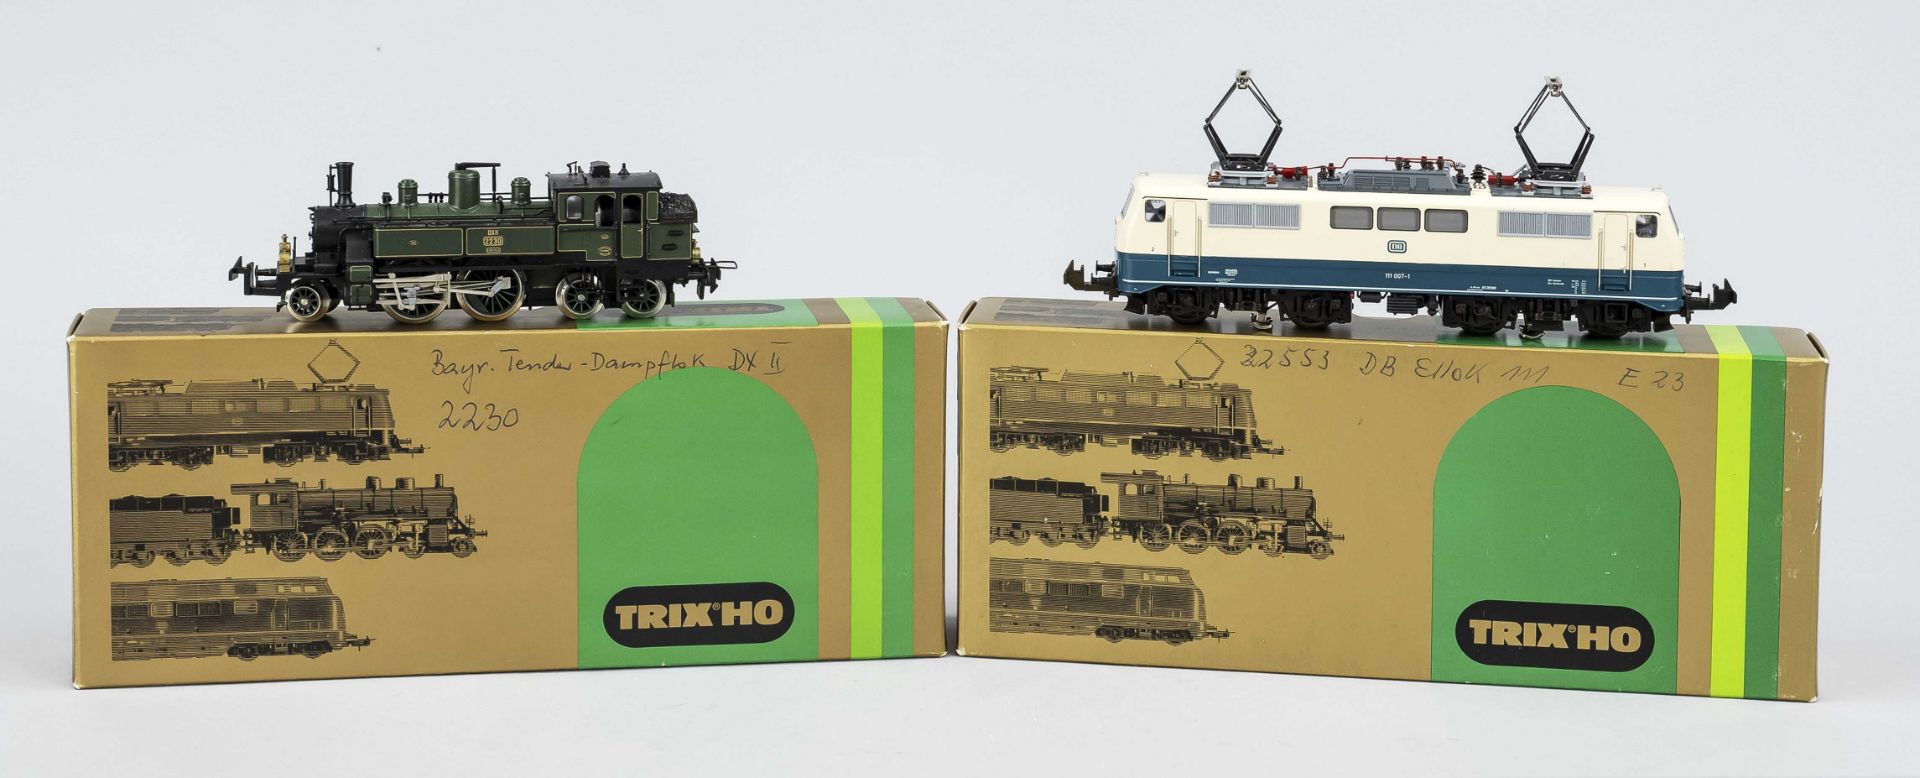 TRIX H0 Bavarian tender steam locomotive DX II 2230 & DB locomotive 111/E23. Both in original